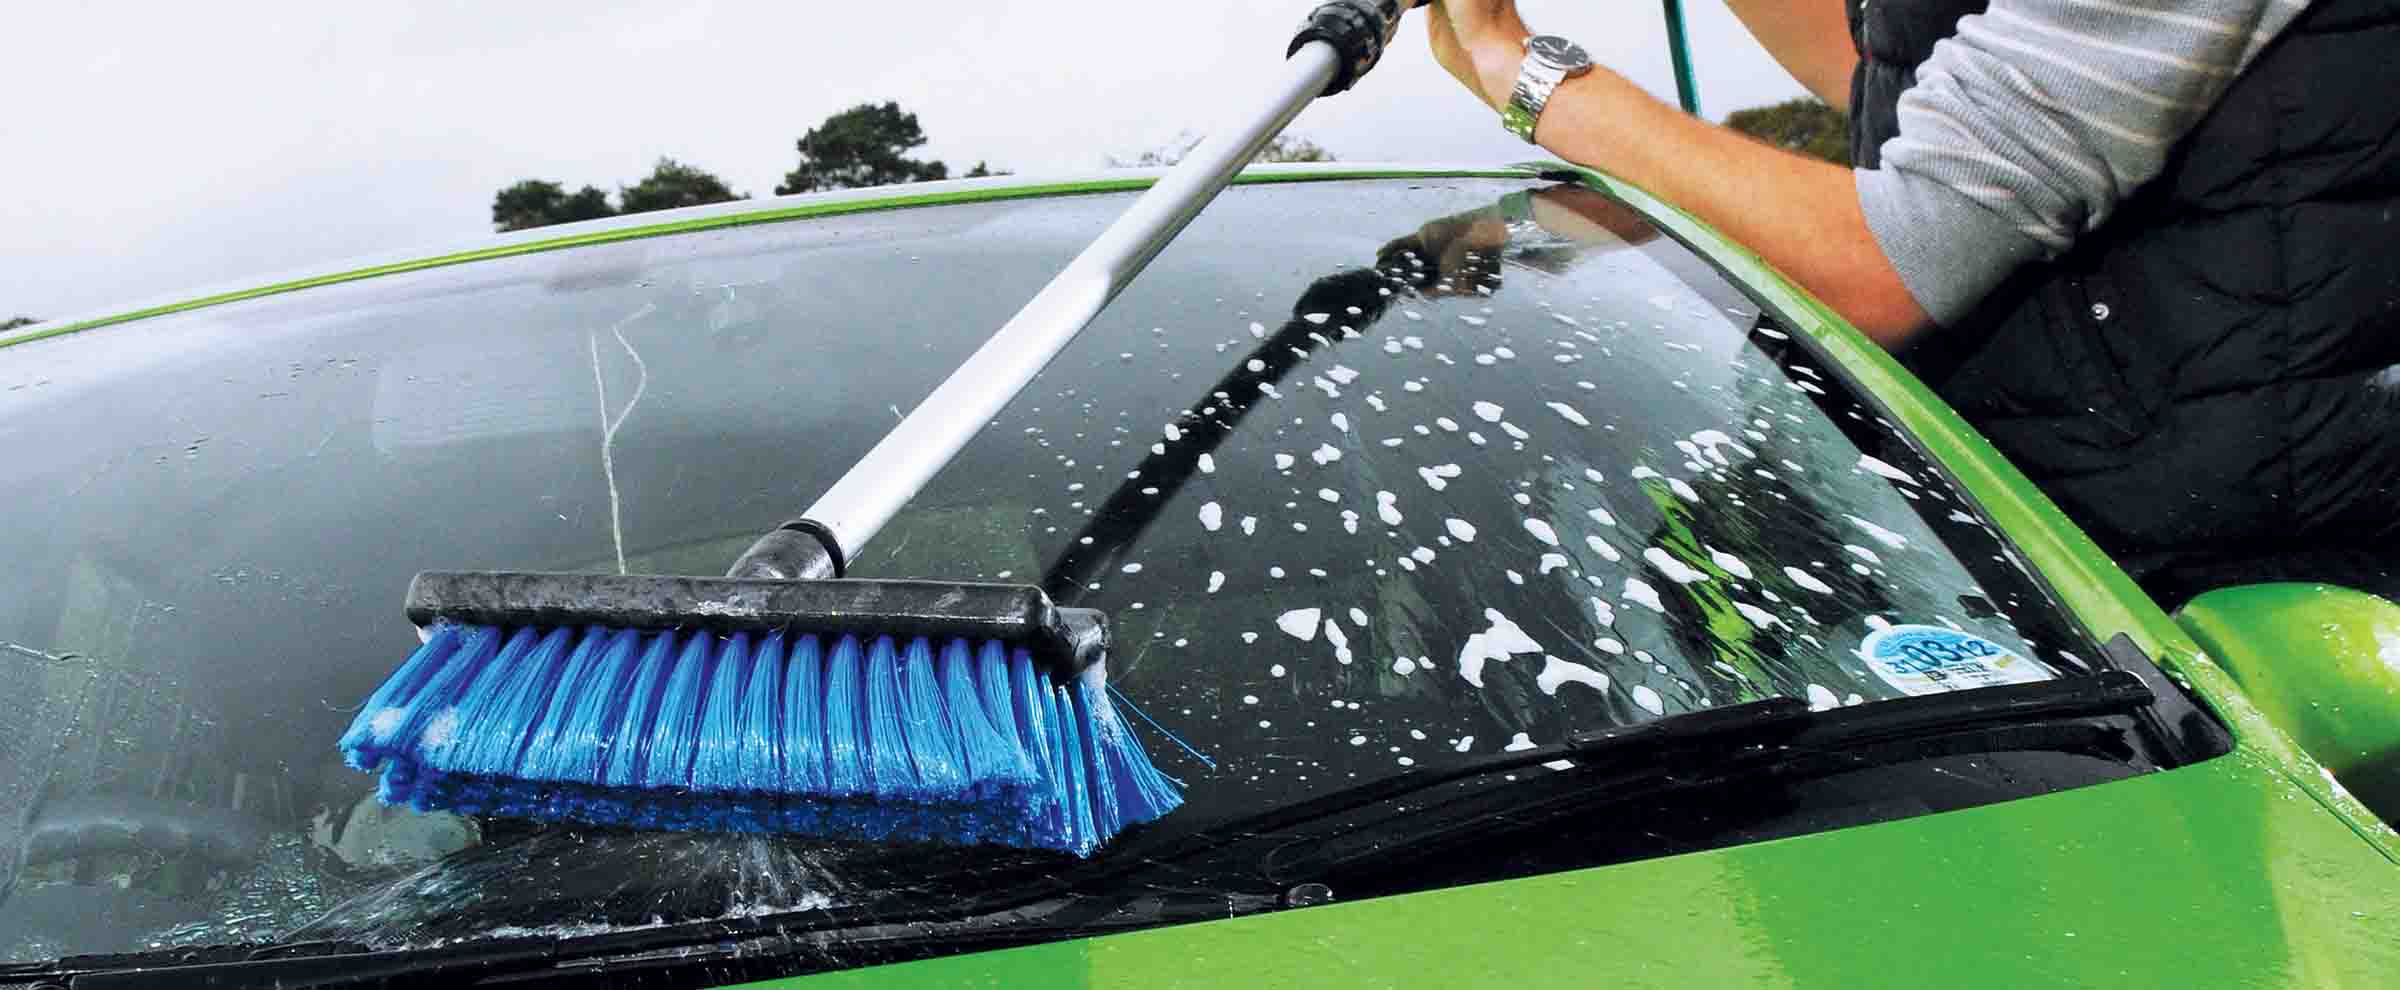 Balai de nettoyage de voiture anti-rayures brosse de lavage de